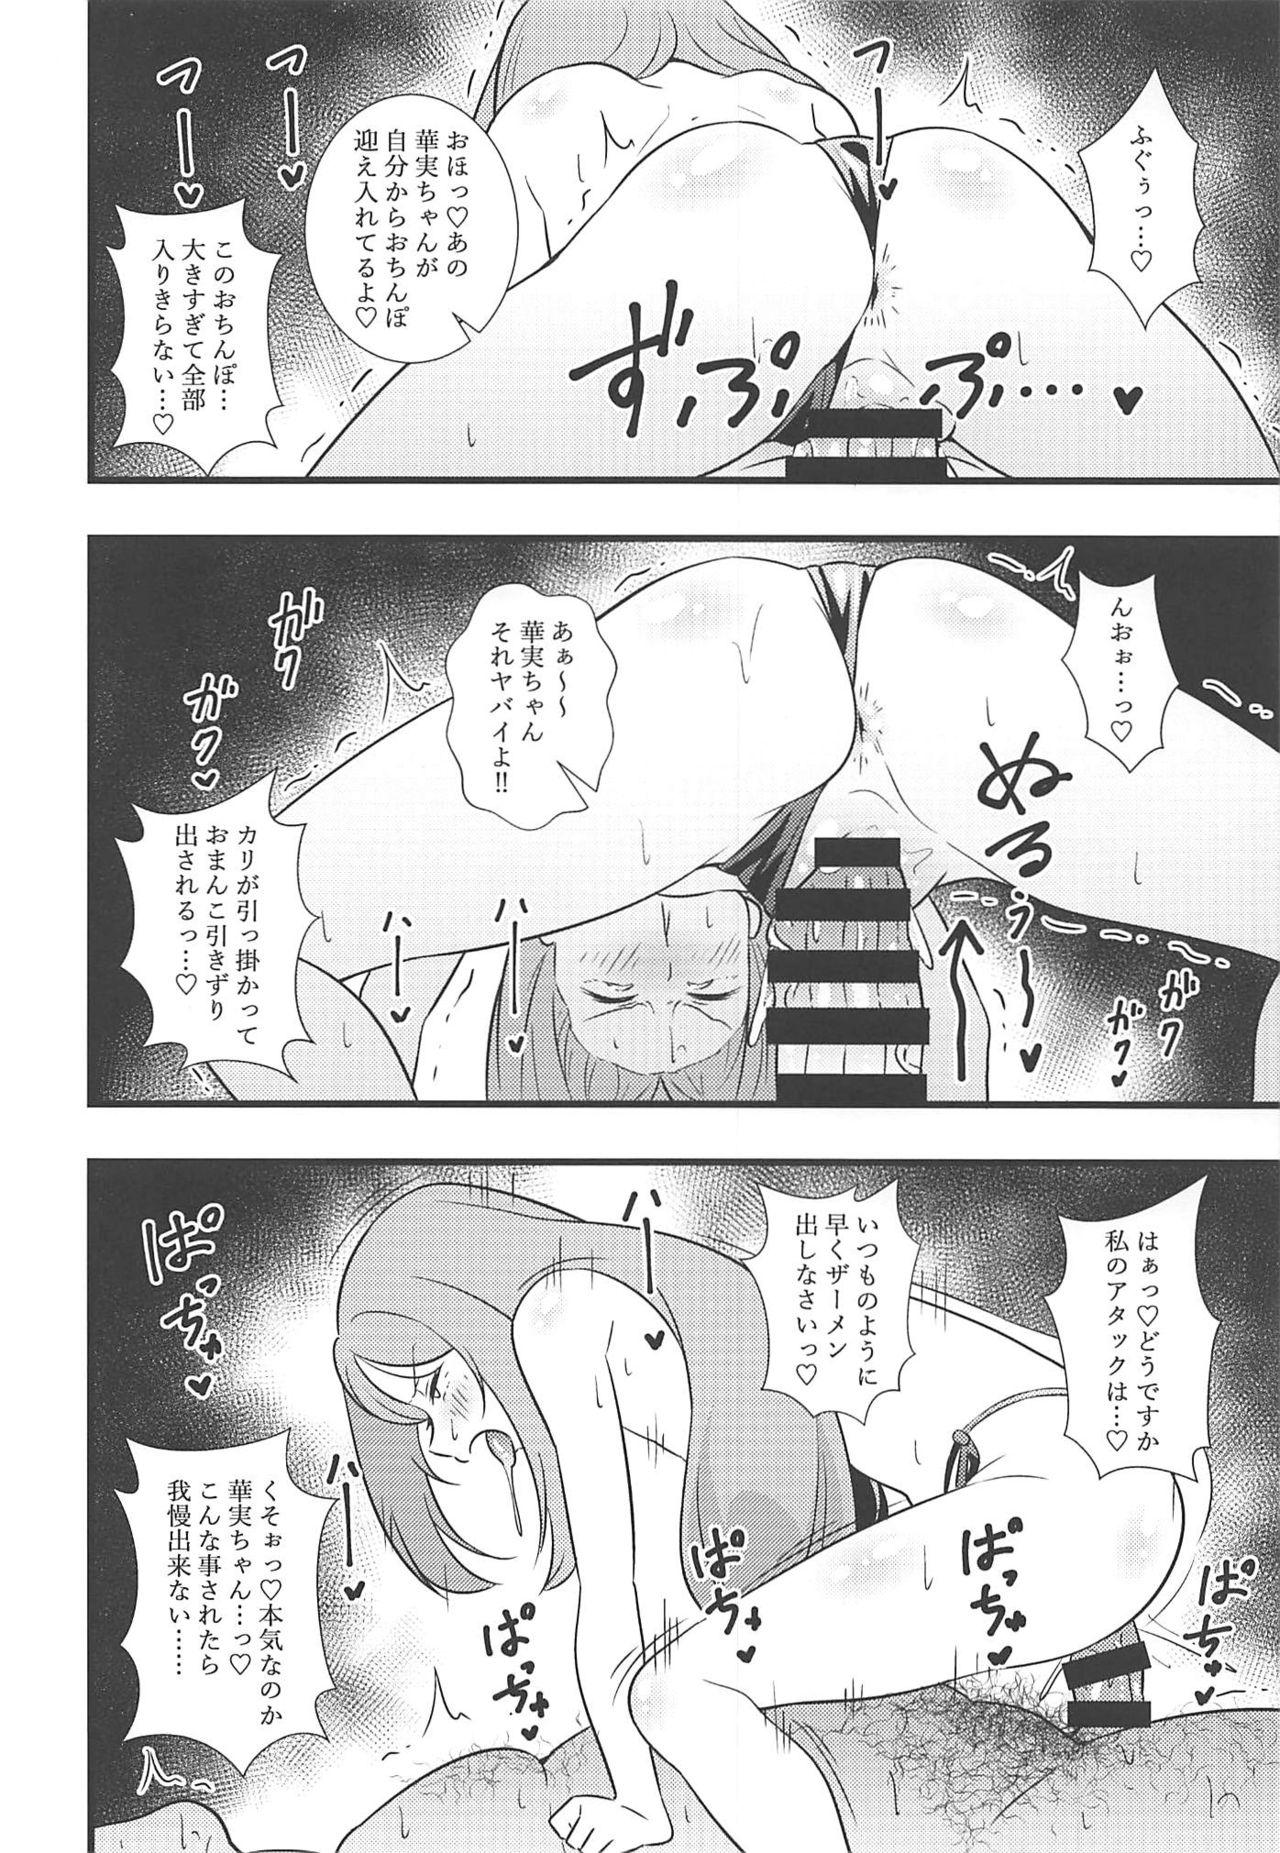 Perfect Pussy Shouten! Harame Ore no Ragna Rock!! Risei ga Buttobu made Tanetsuke Rape - Battle spirits Outside - Page 11